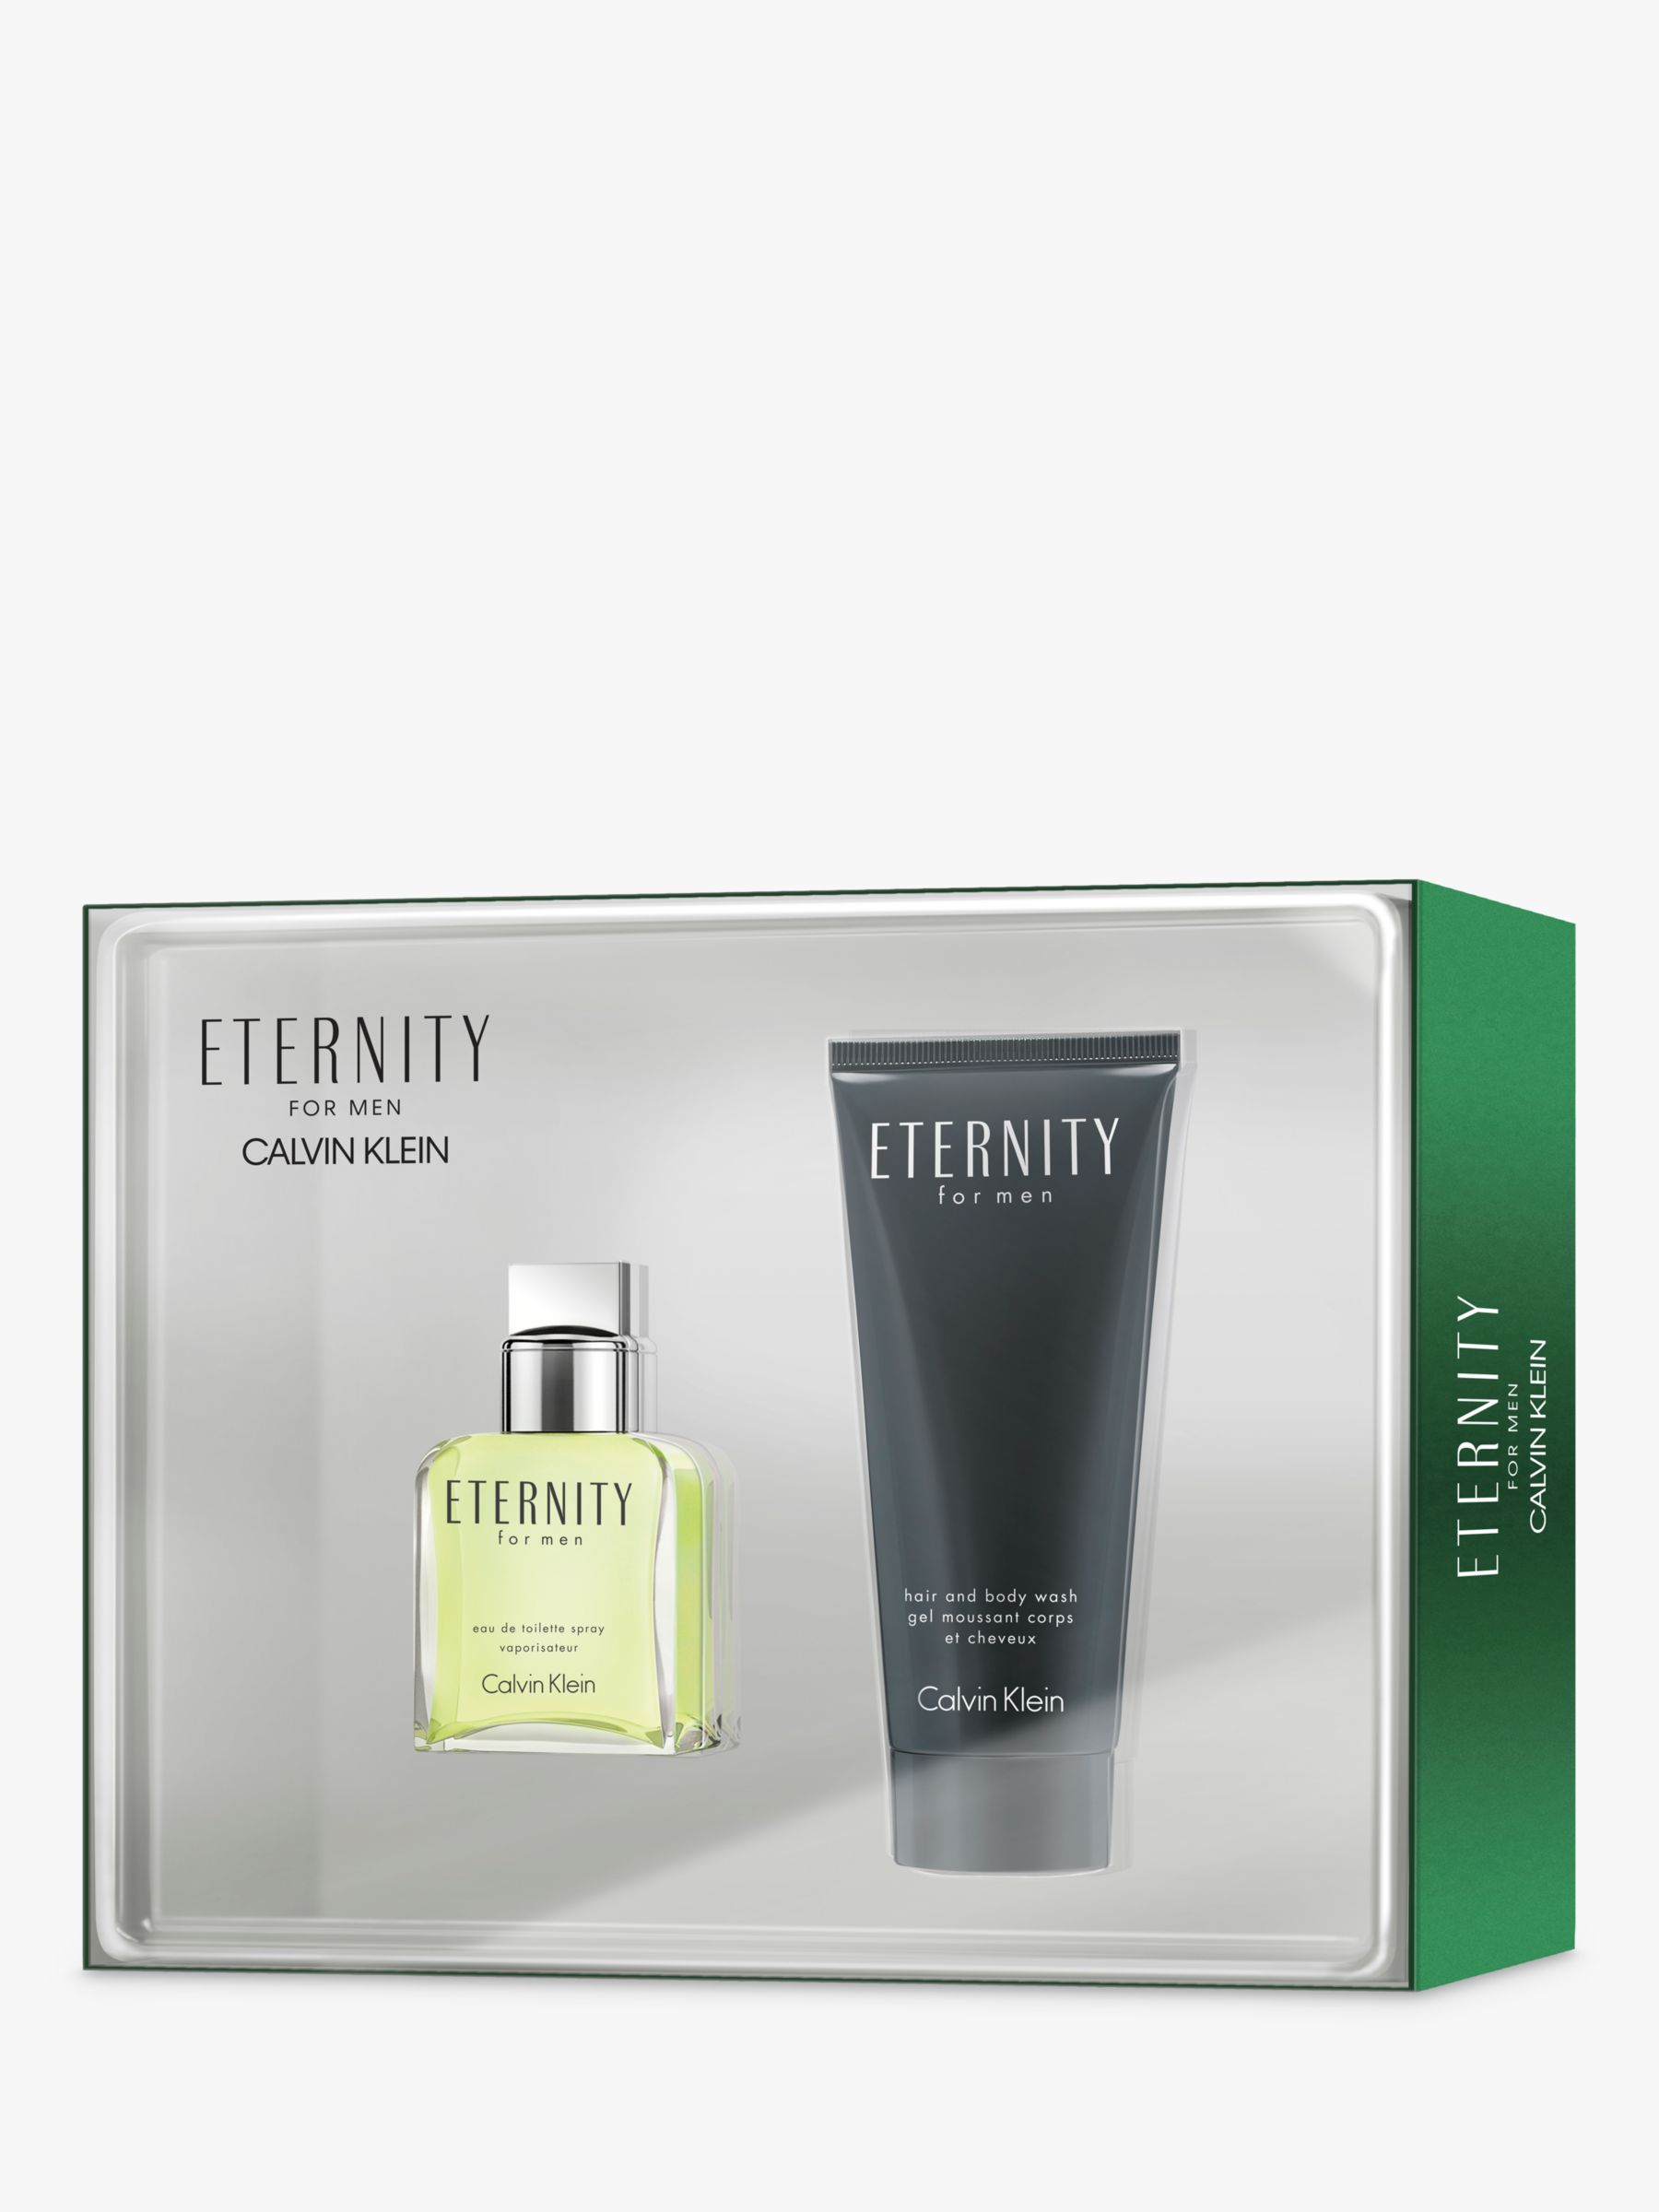 Calvin Klein Eternity For Men 30ml Eau de Toilette Fragrance Gift Set